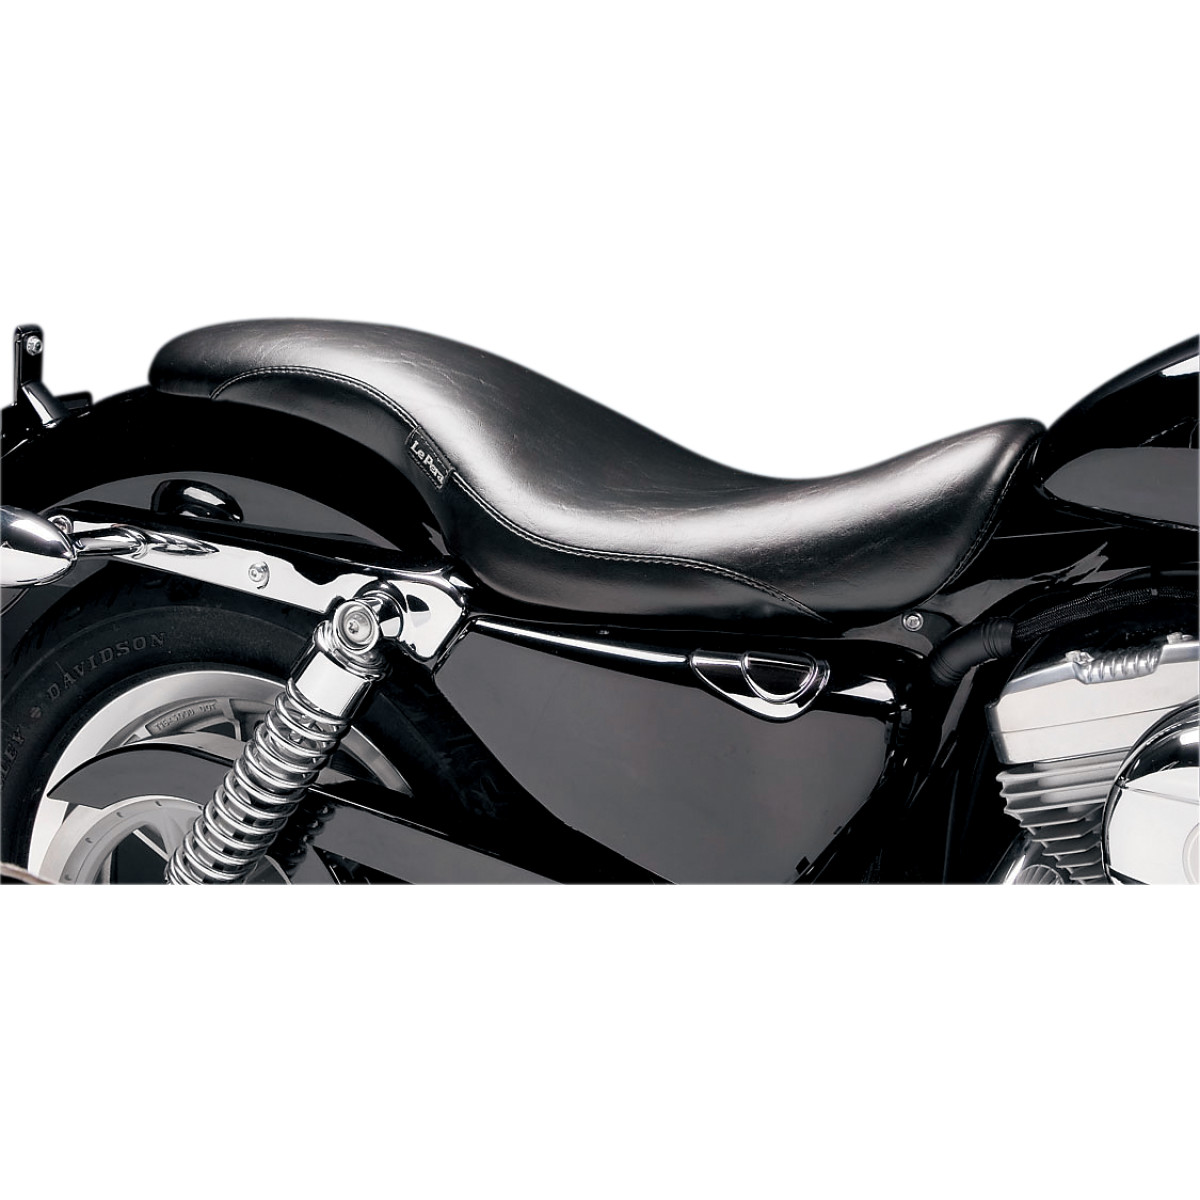 Le Pera Le Pera - Dvojdielne kožené sedlo pre Harley Davidson Sportster